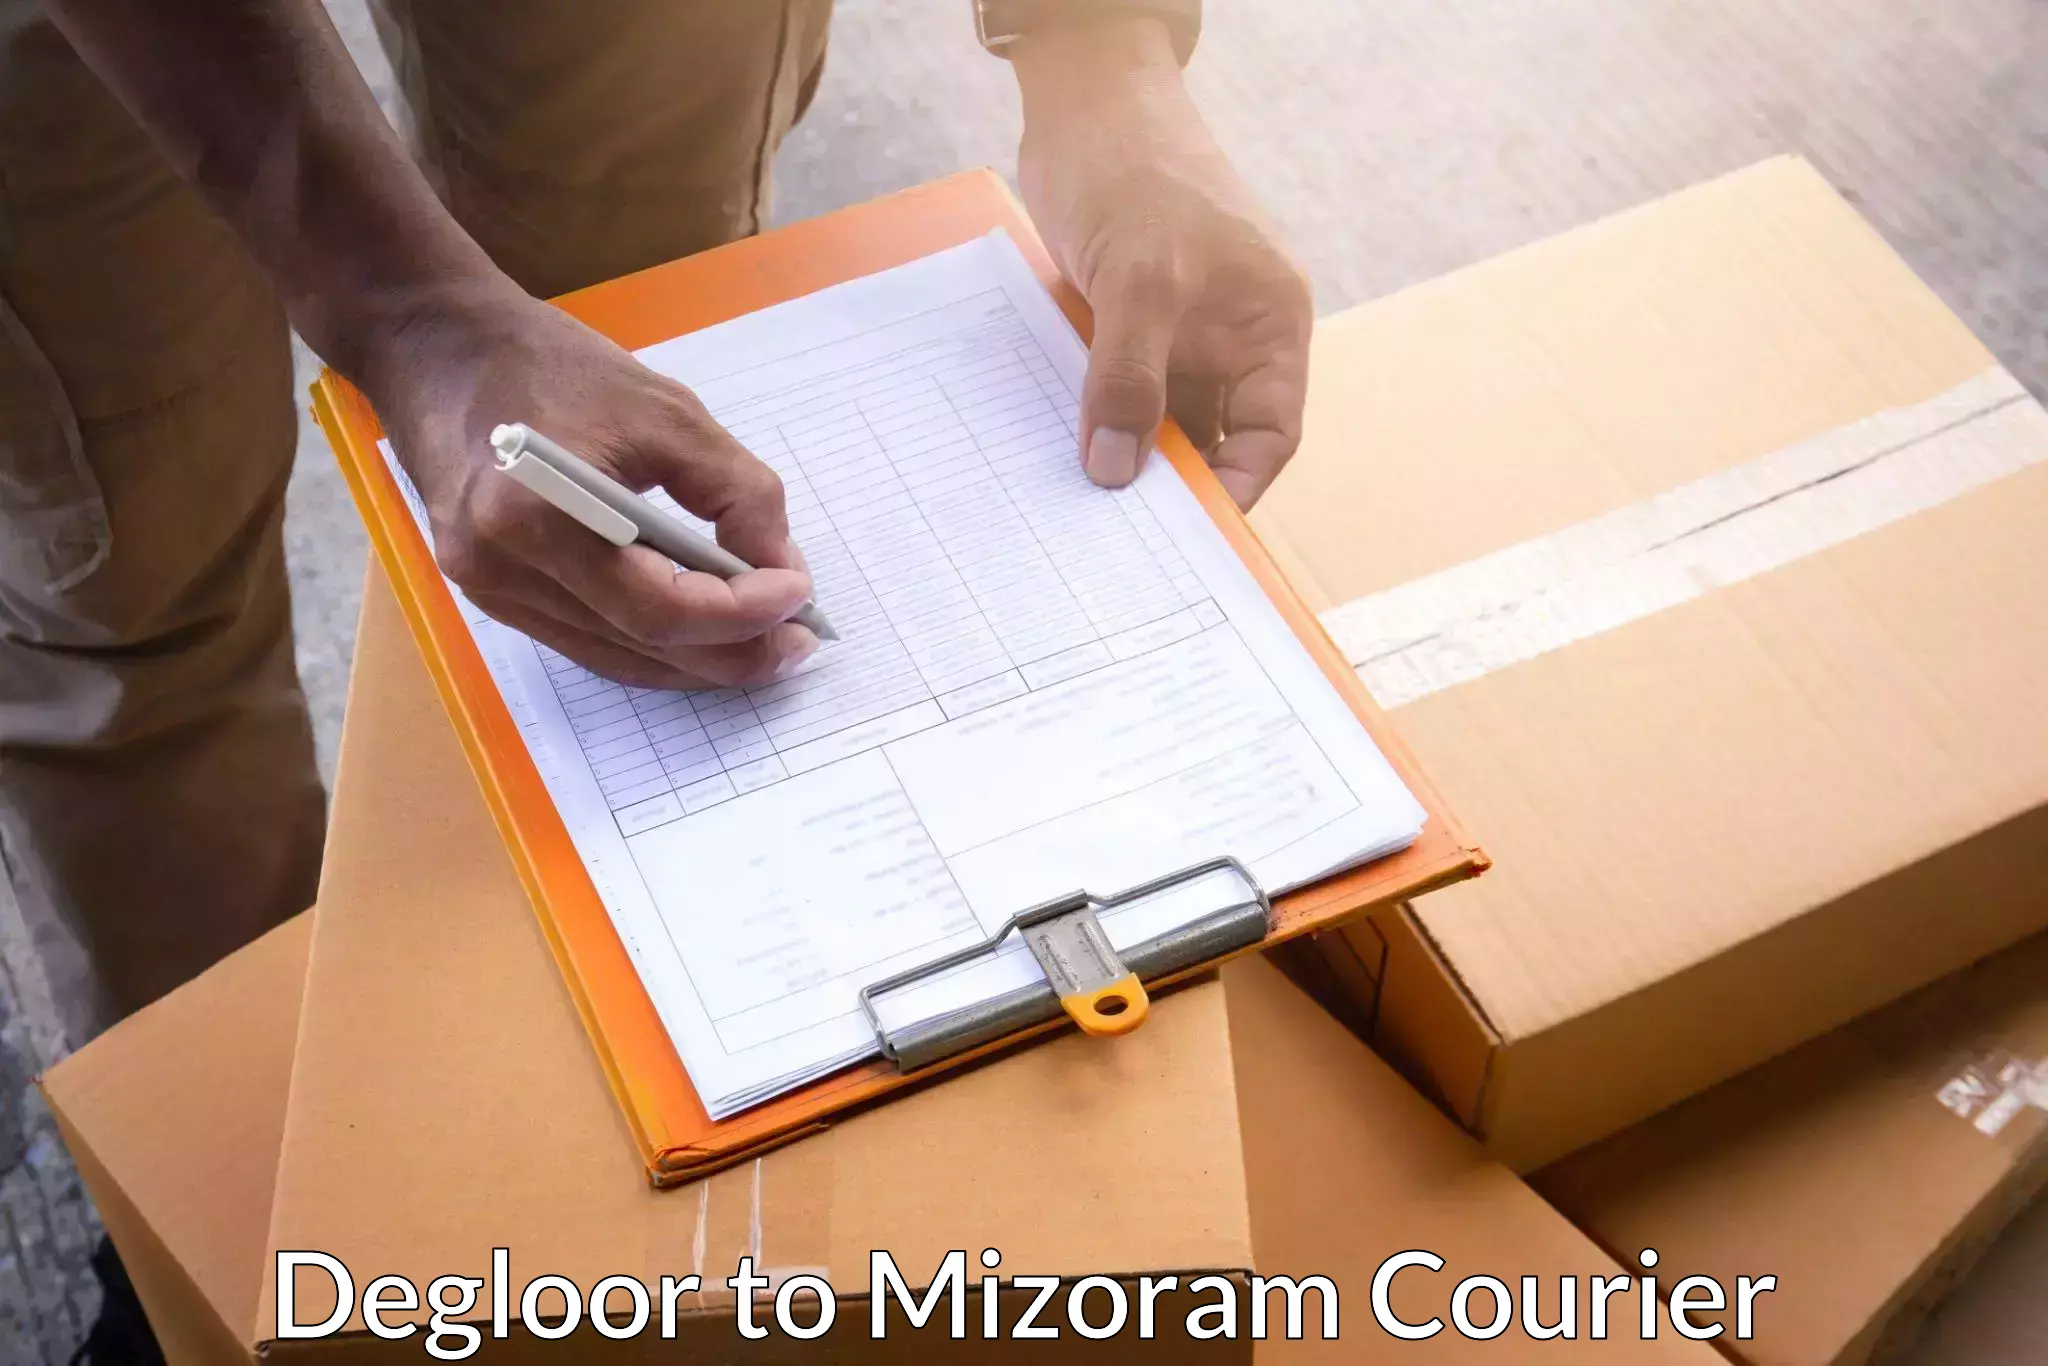 Local delivery service Degloor to Aizawl